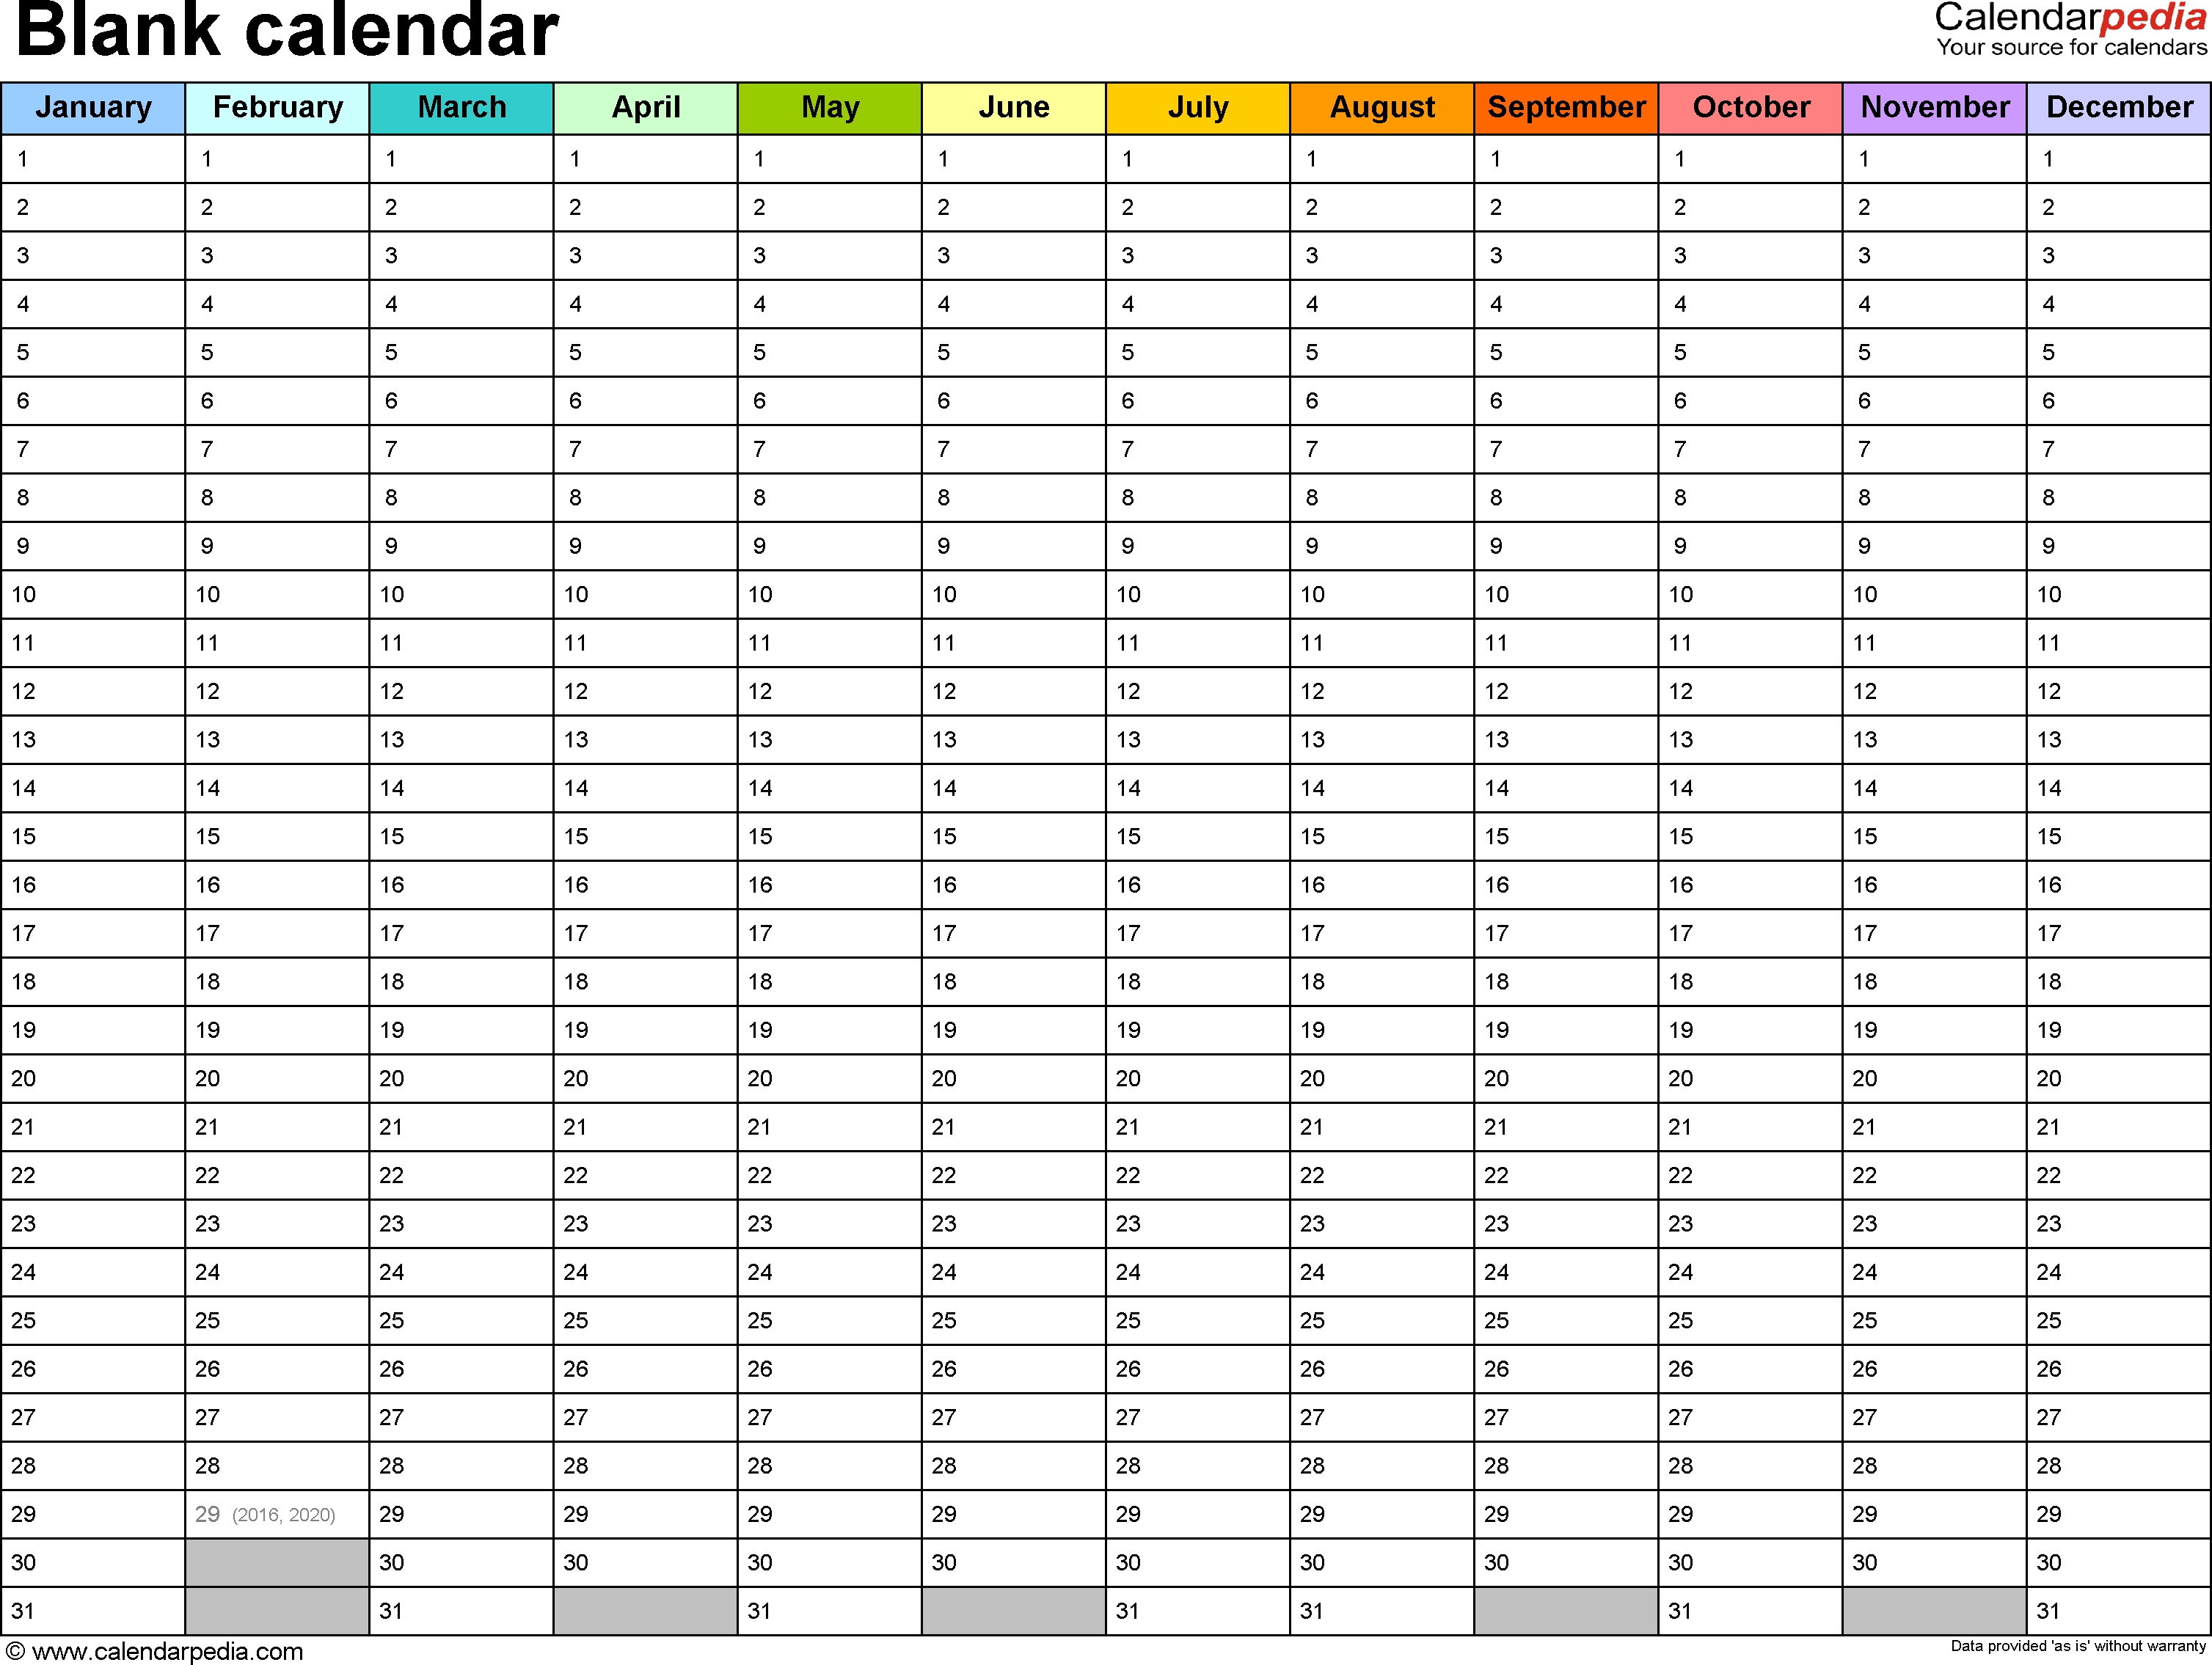 Blank Calendar - 9 Free Printable Microsoft Word Templates Free Calendar Months To Print